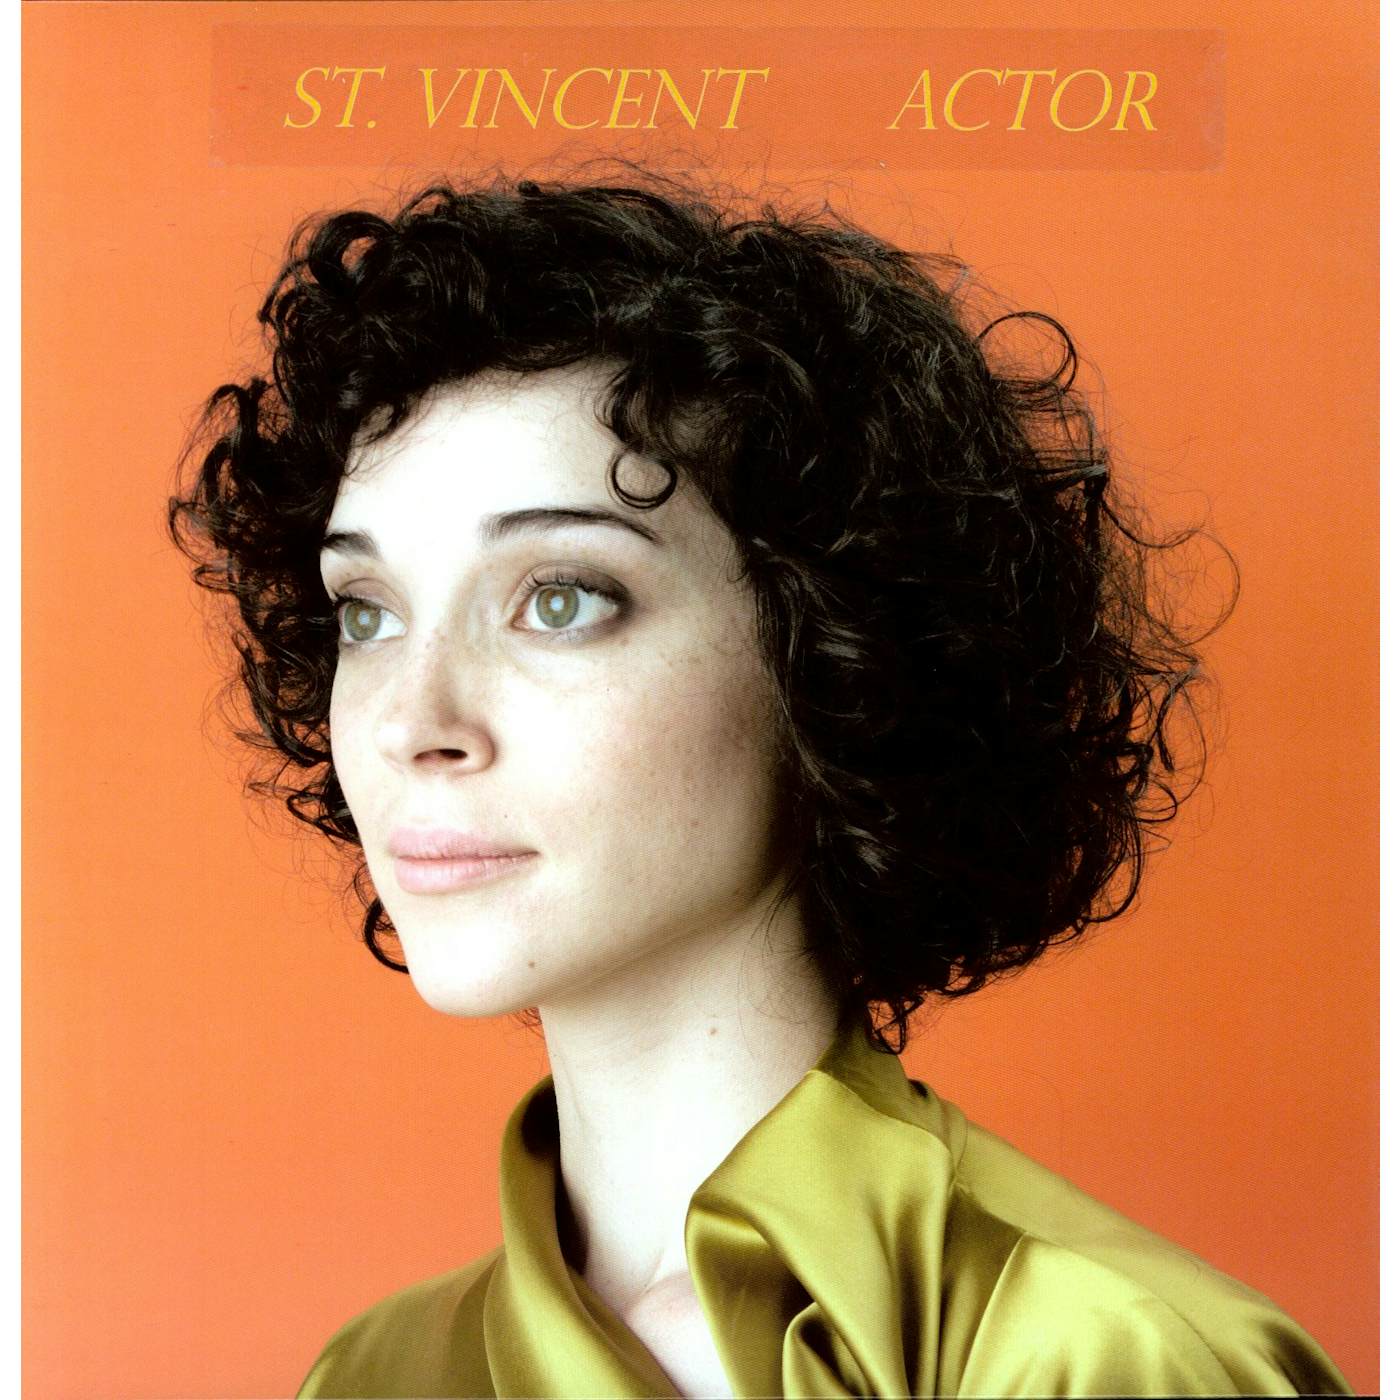 St. Vincent Actor Vinyl Record